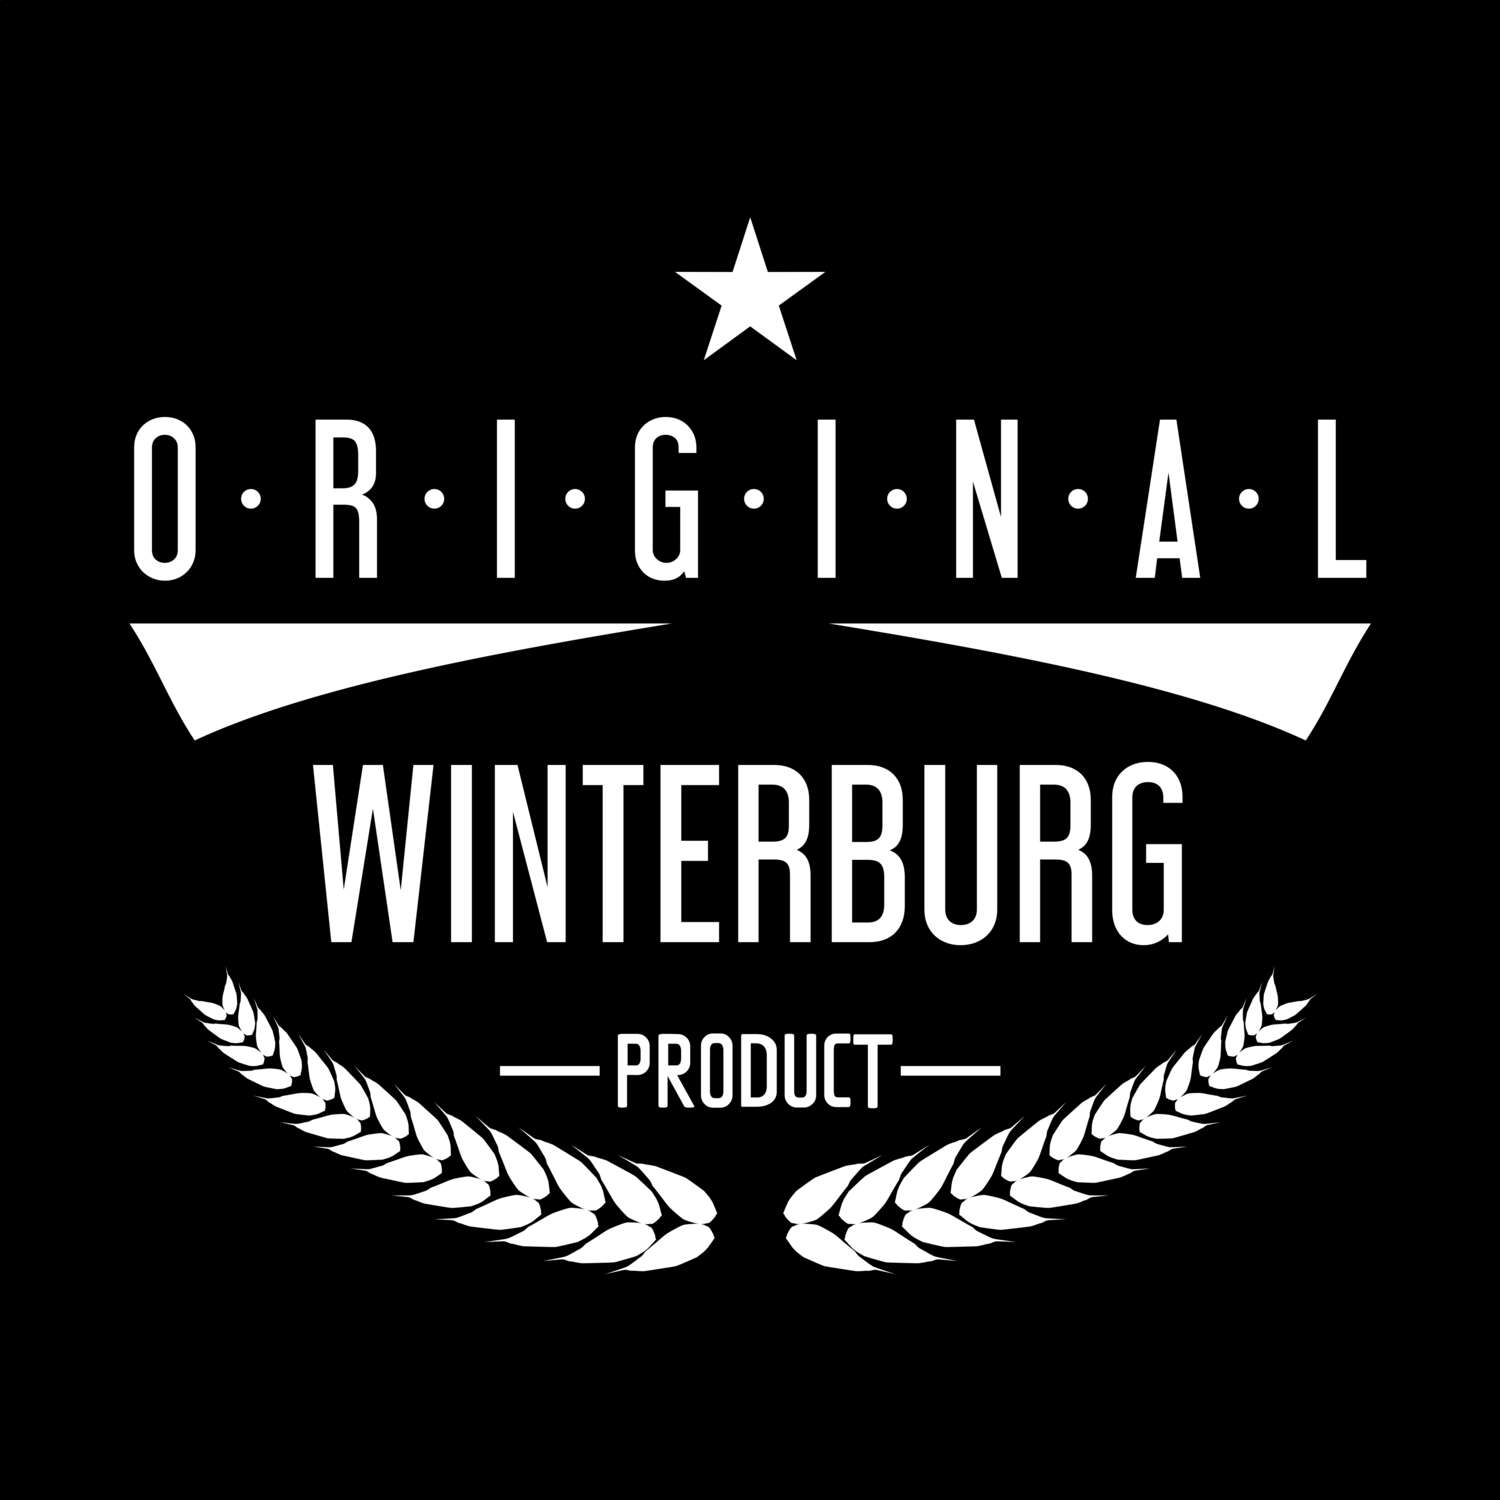 Winterburg T-Shirt »Original Product«